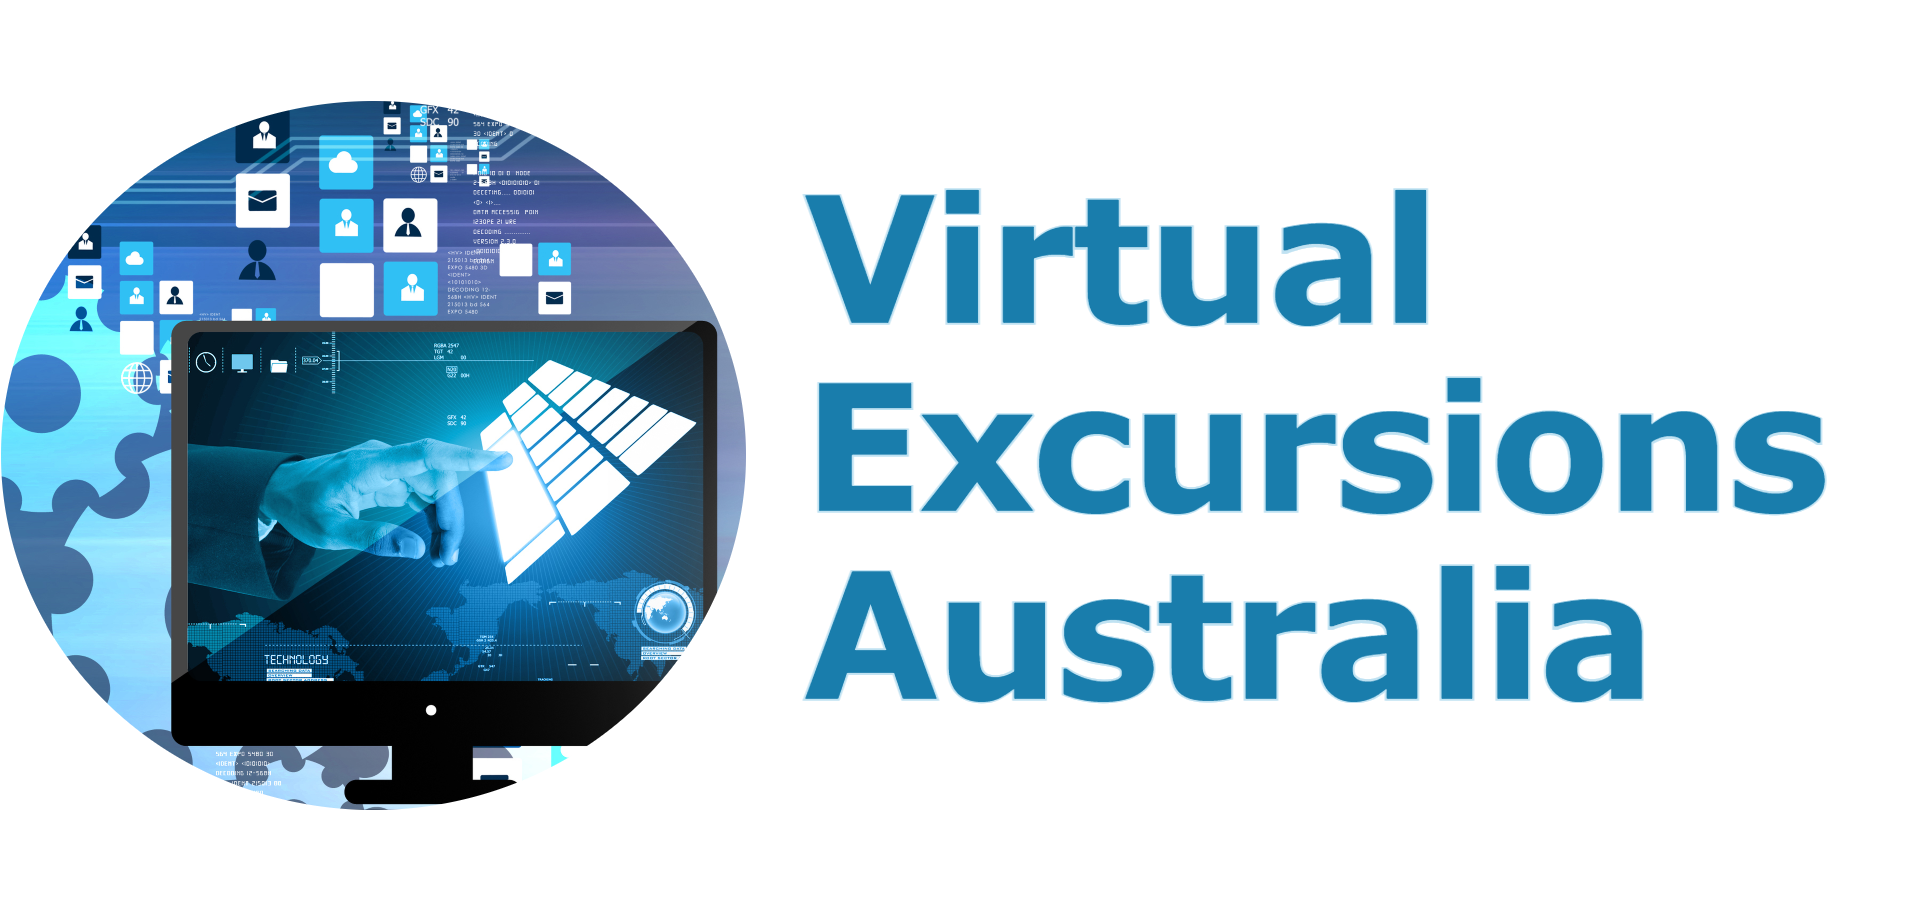 Virtua Excursions Australia